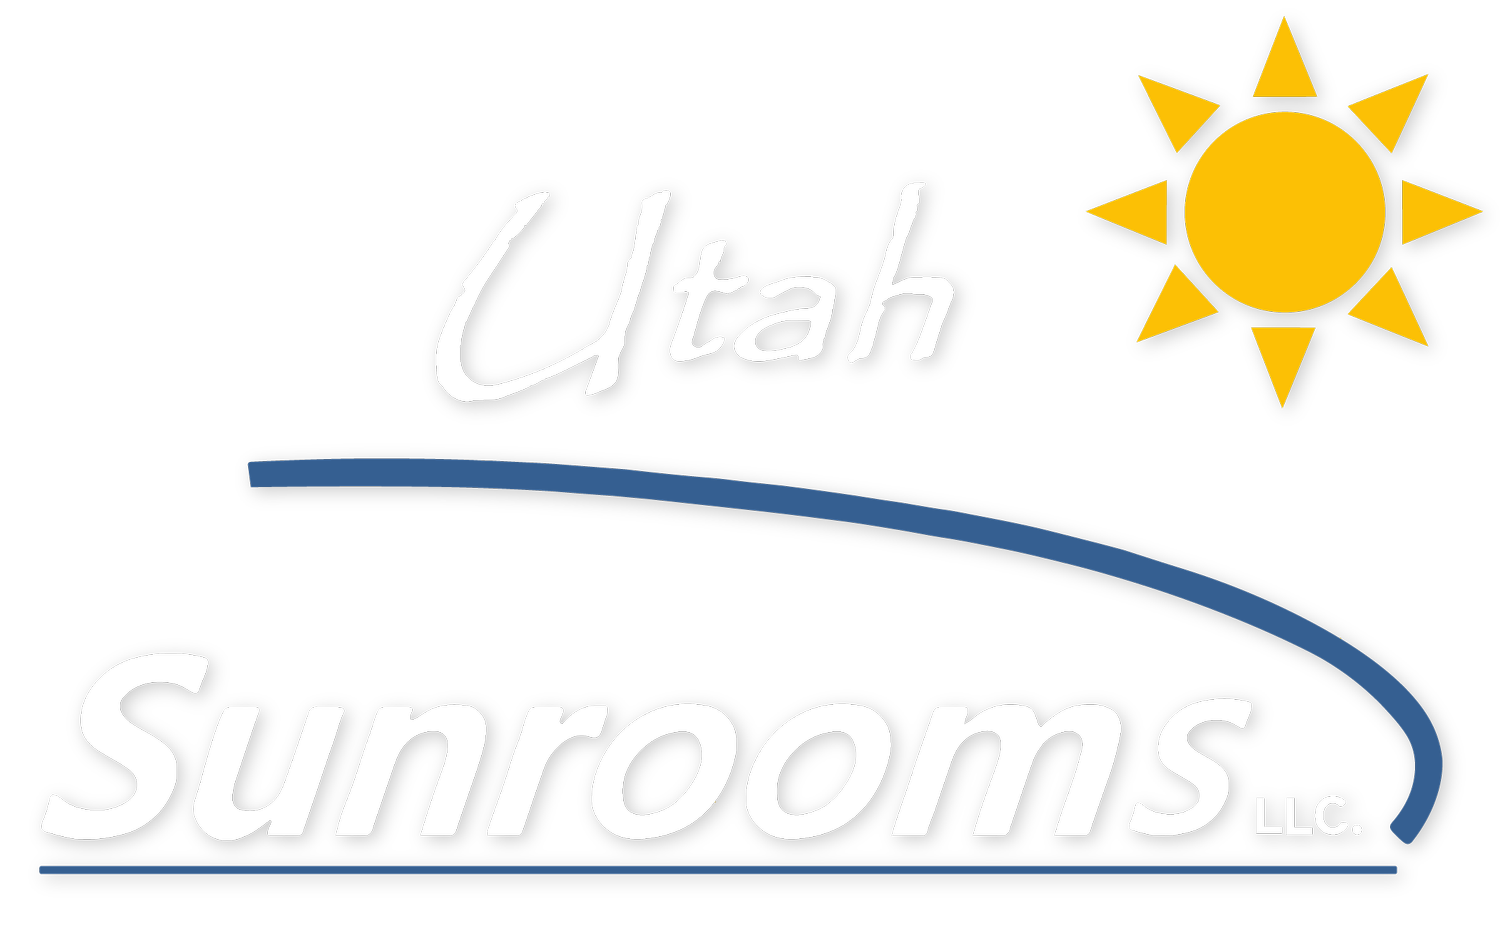 Utah Sunrooms